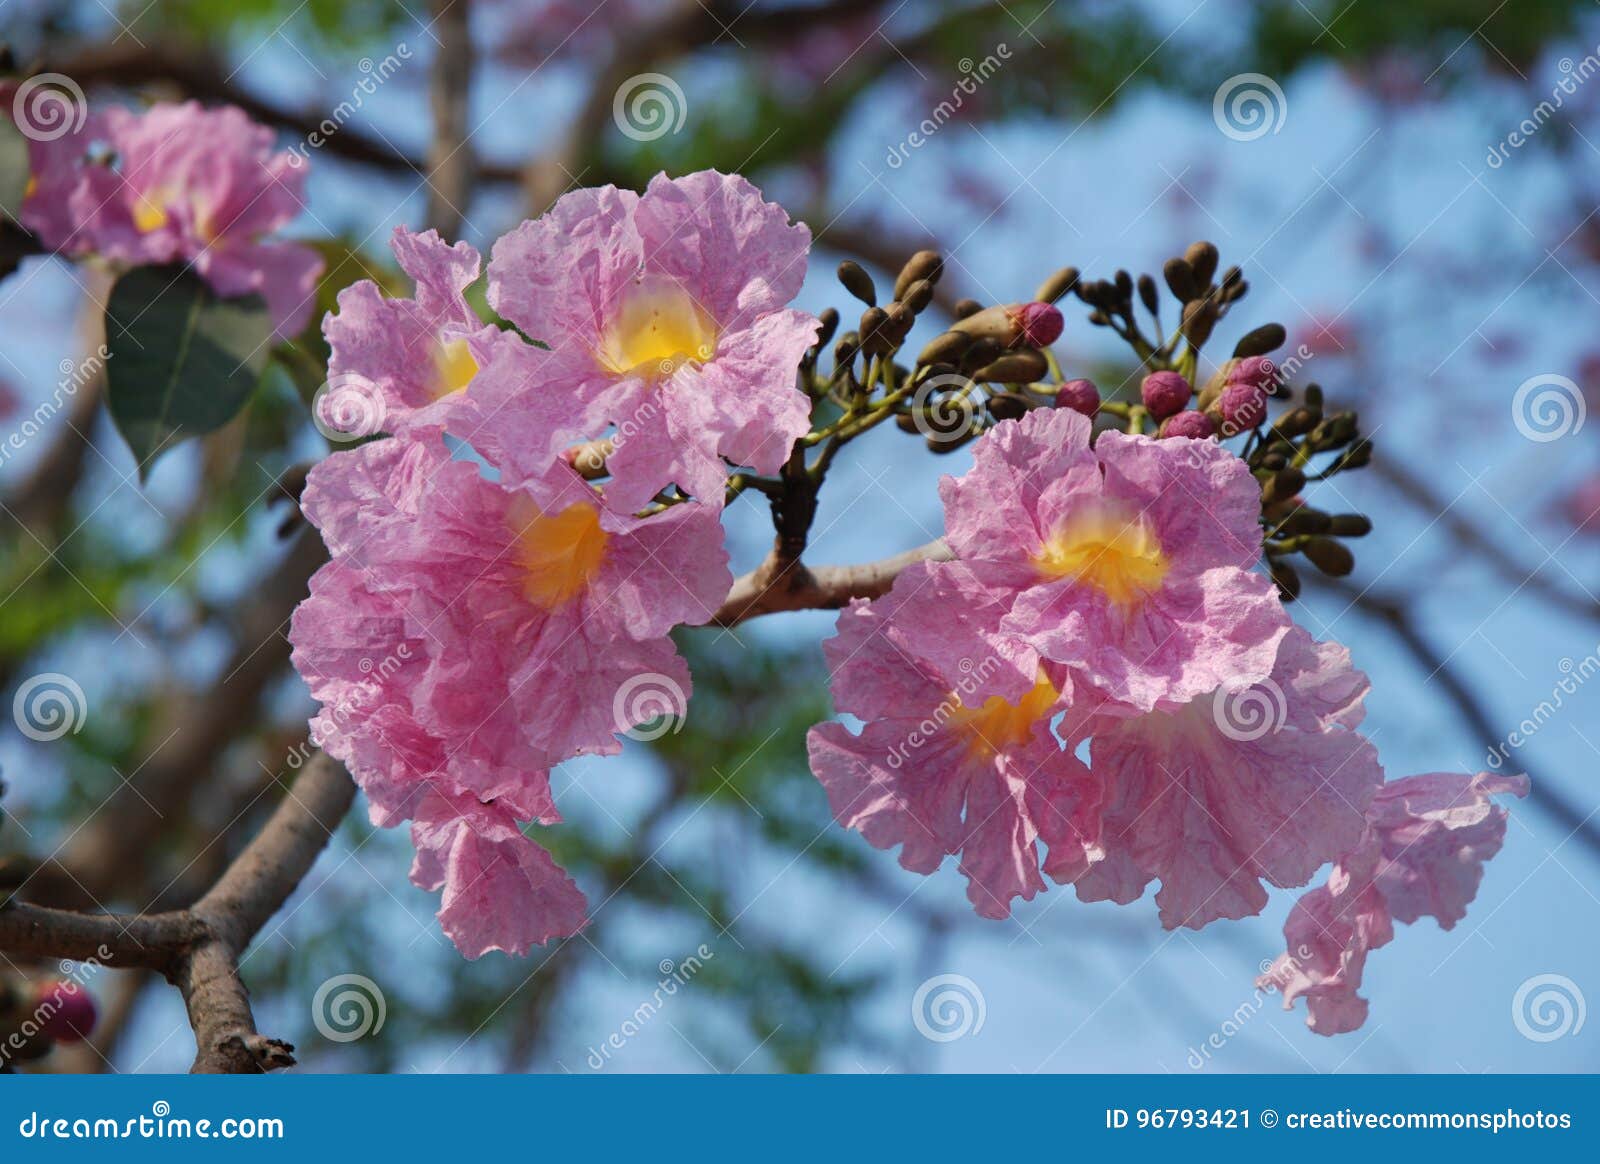  Sakura  Thailand Flower Picture Image 96793421